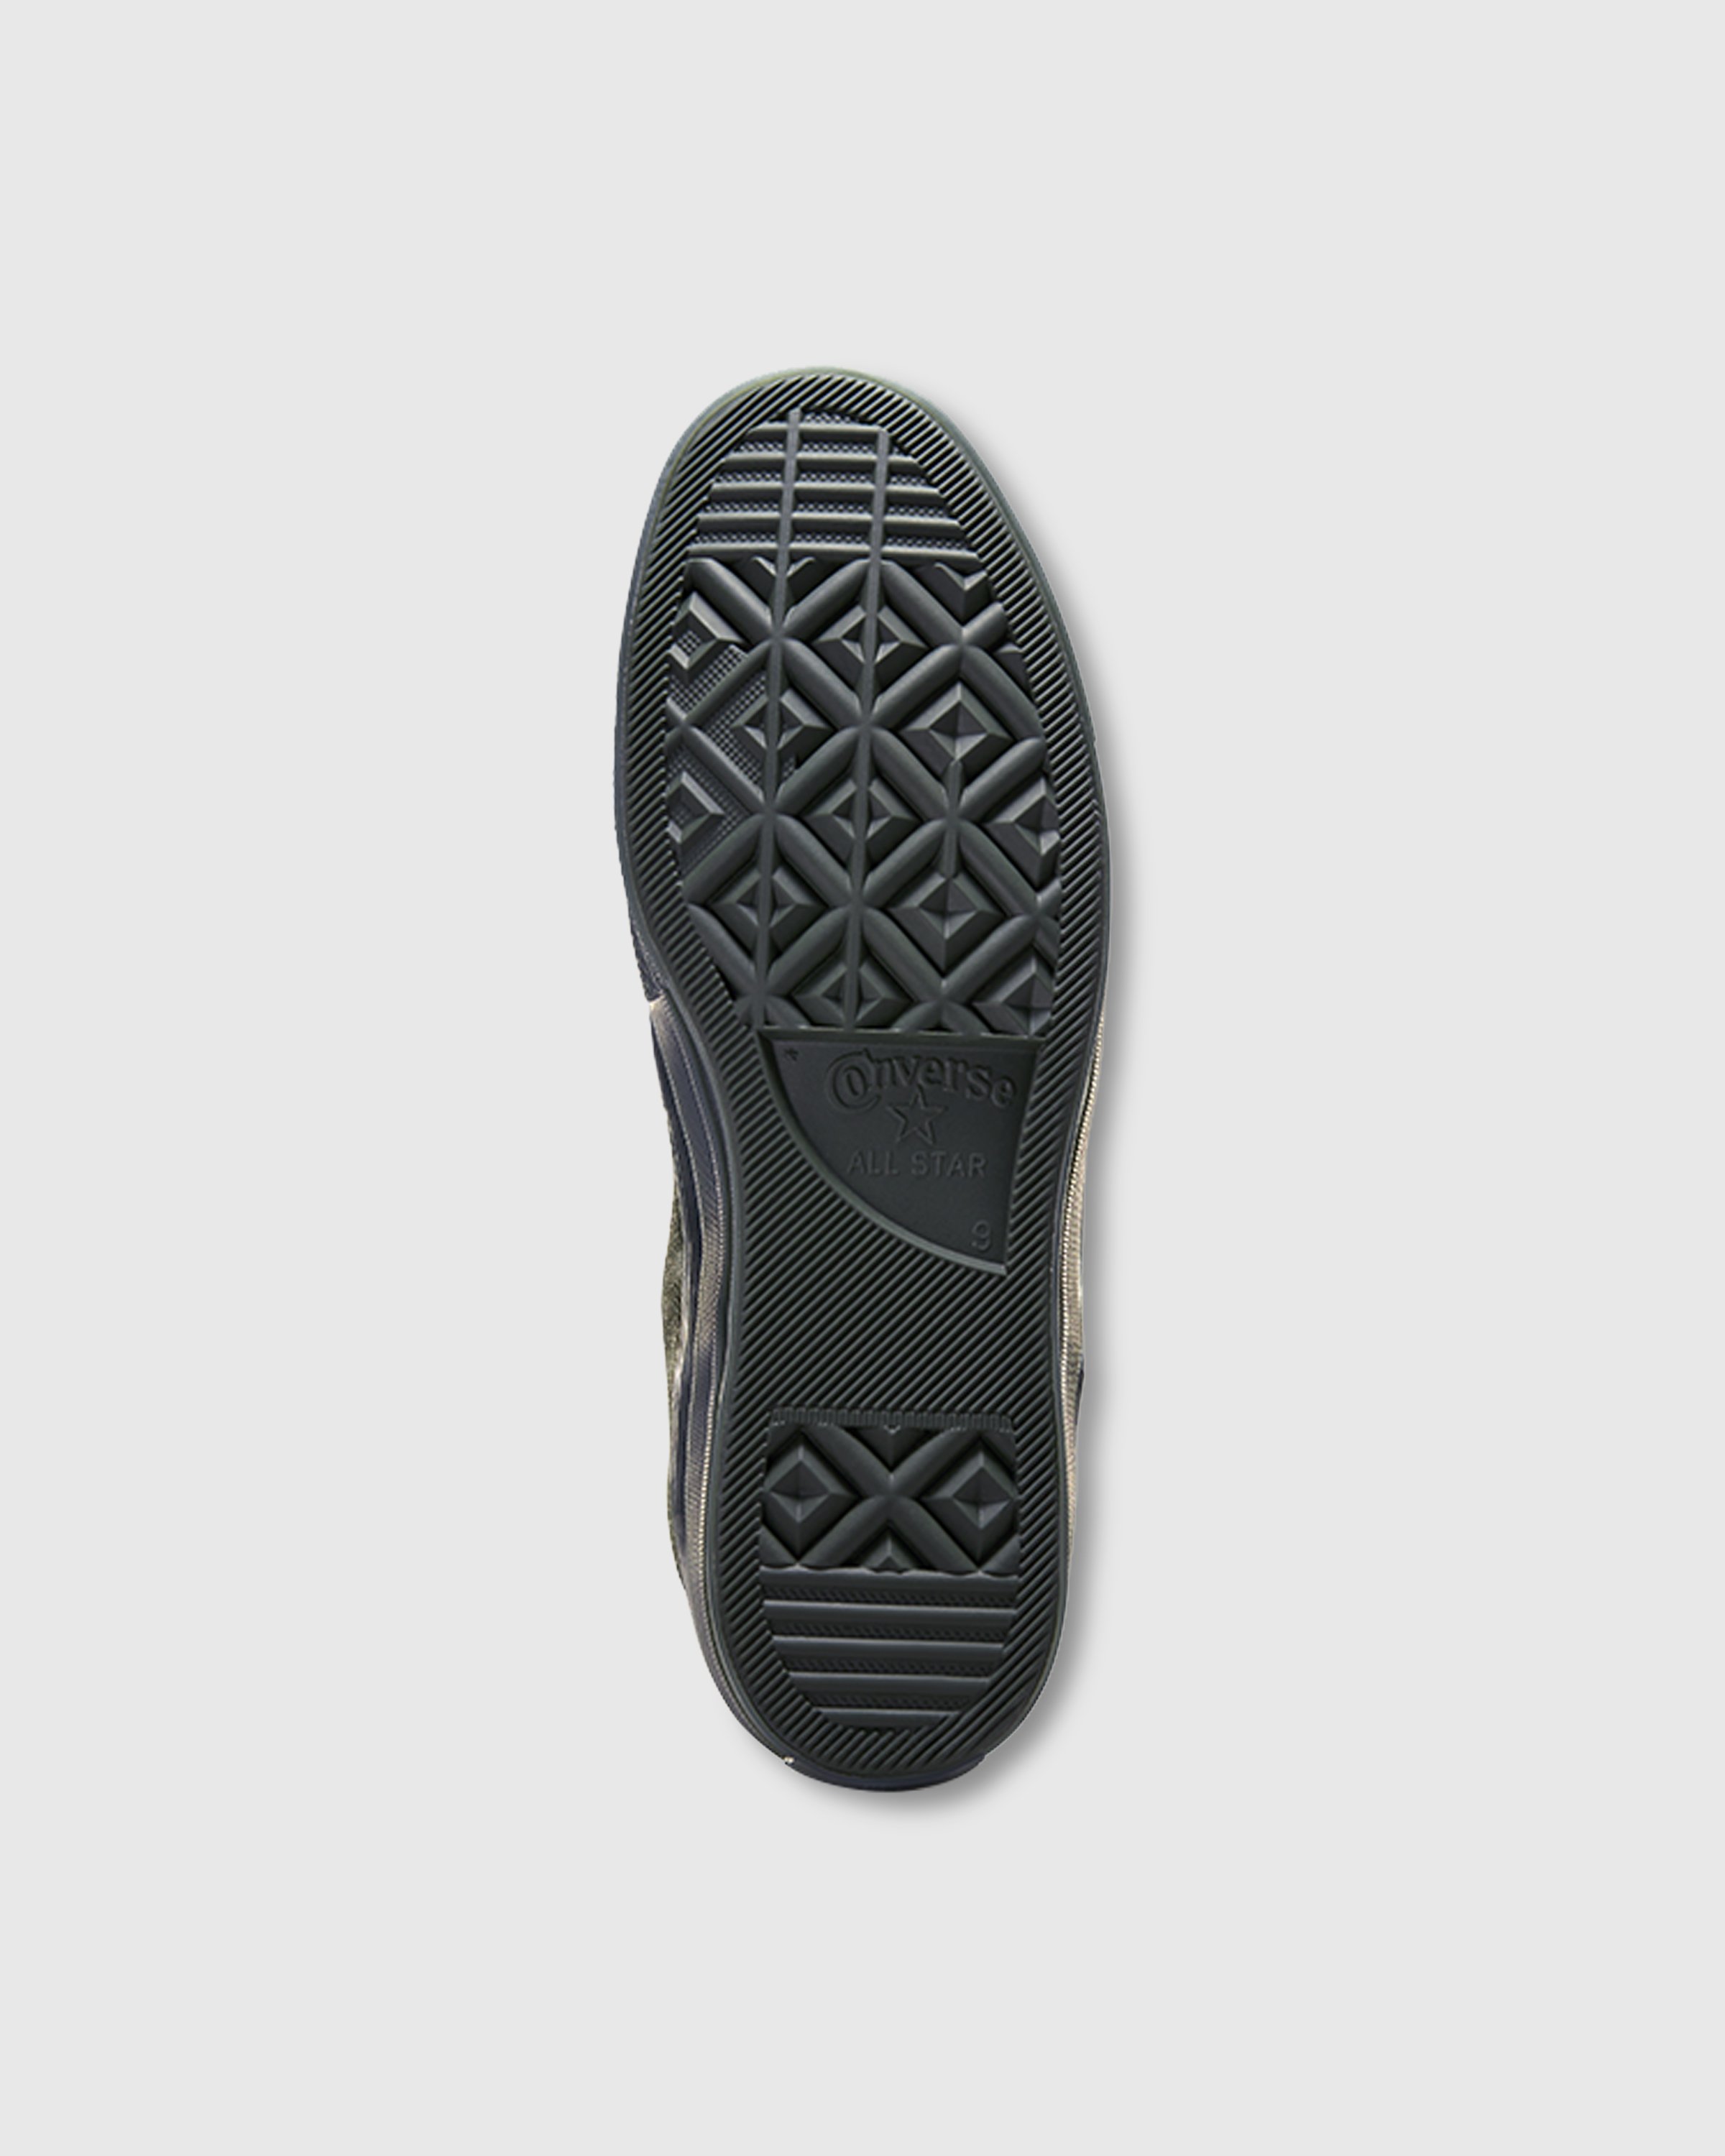 Converse x Patta - CHUCK 70 MARQUIS HI BLACK/MINERAL GRAY - Footwear - Black - Image 4